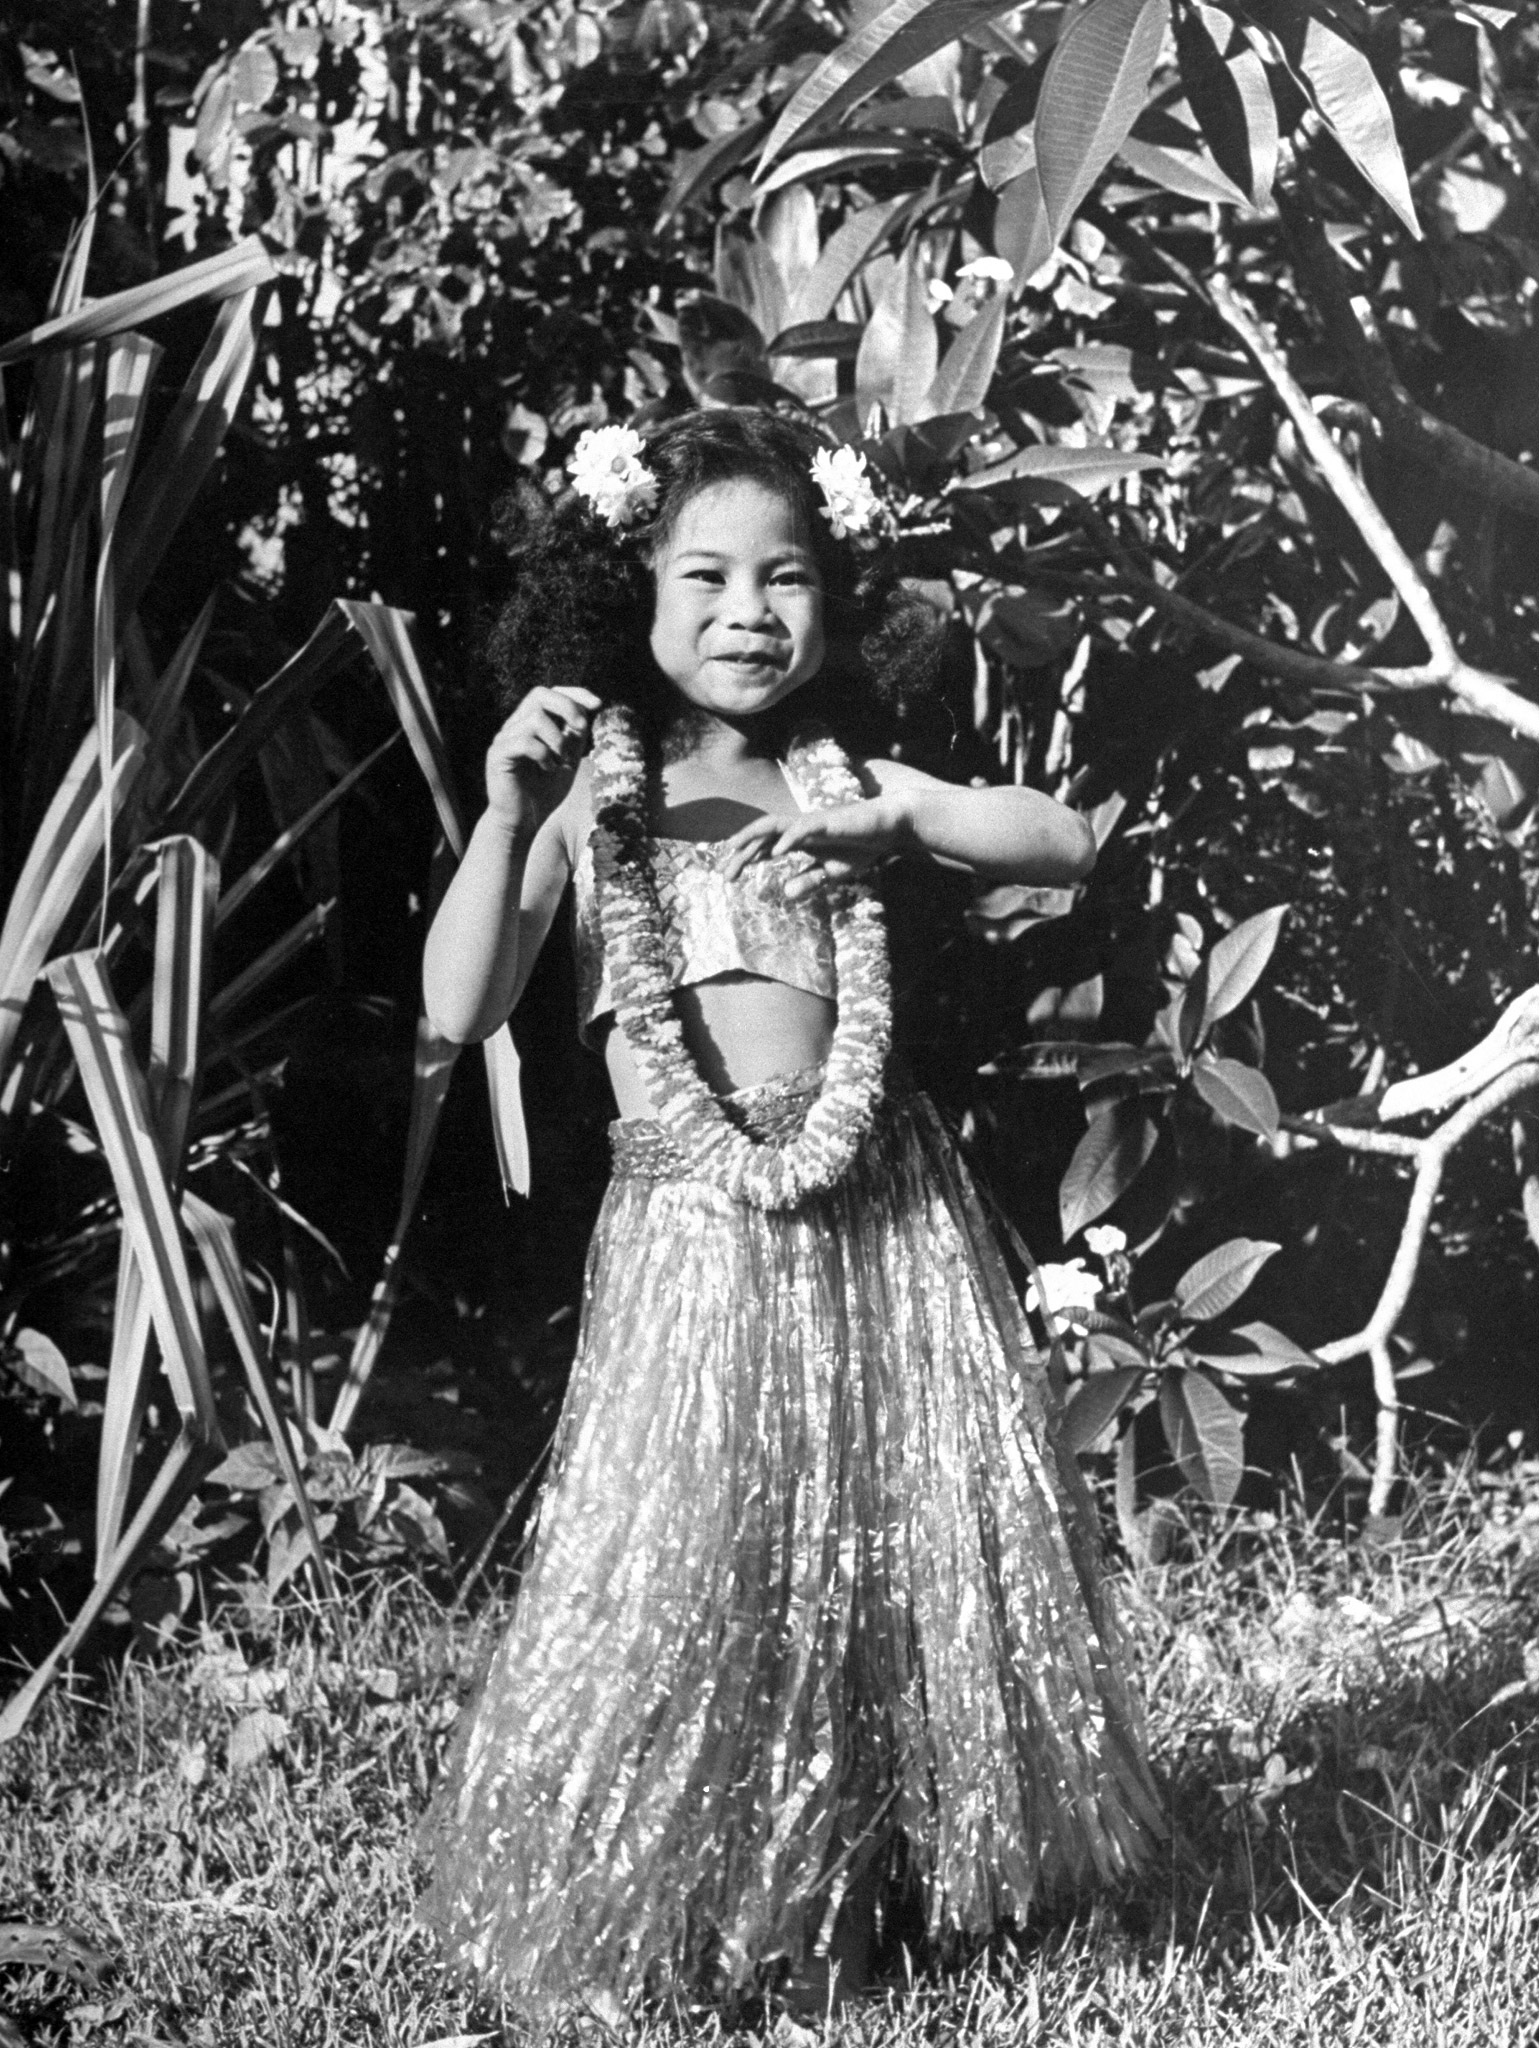 Young girl dancing in hula skirt.